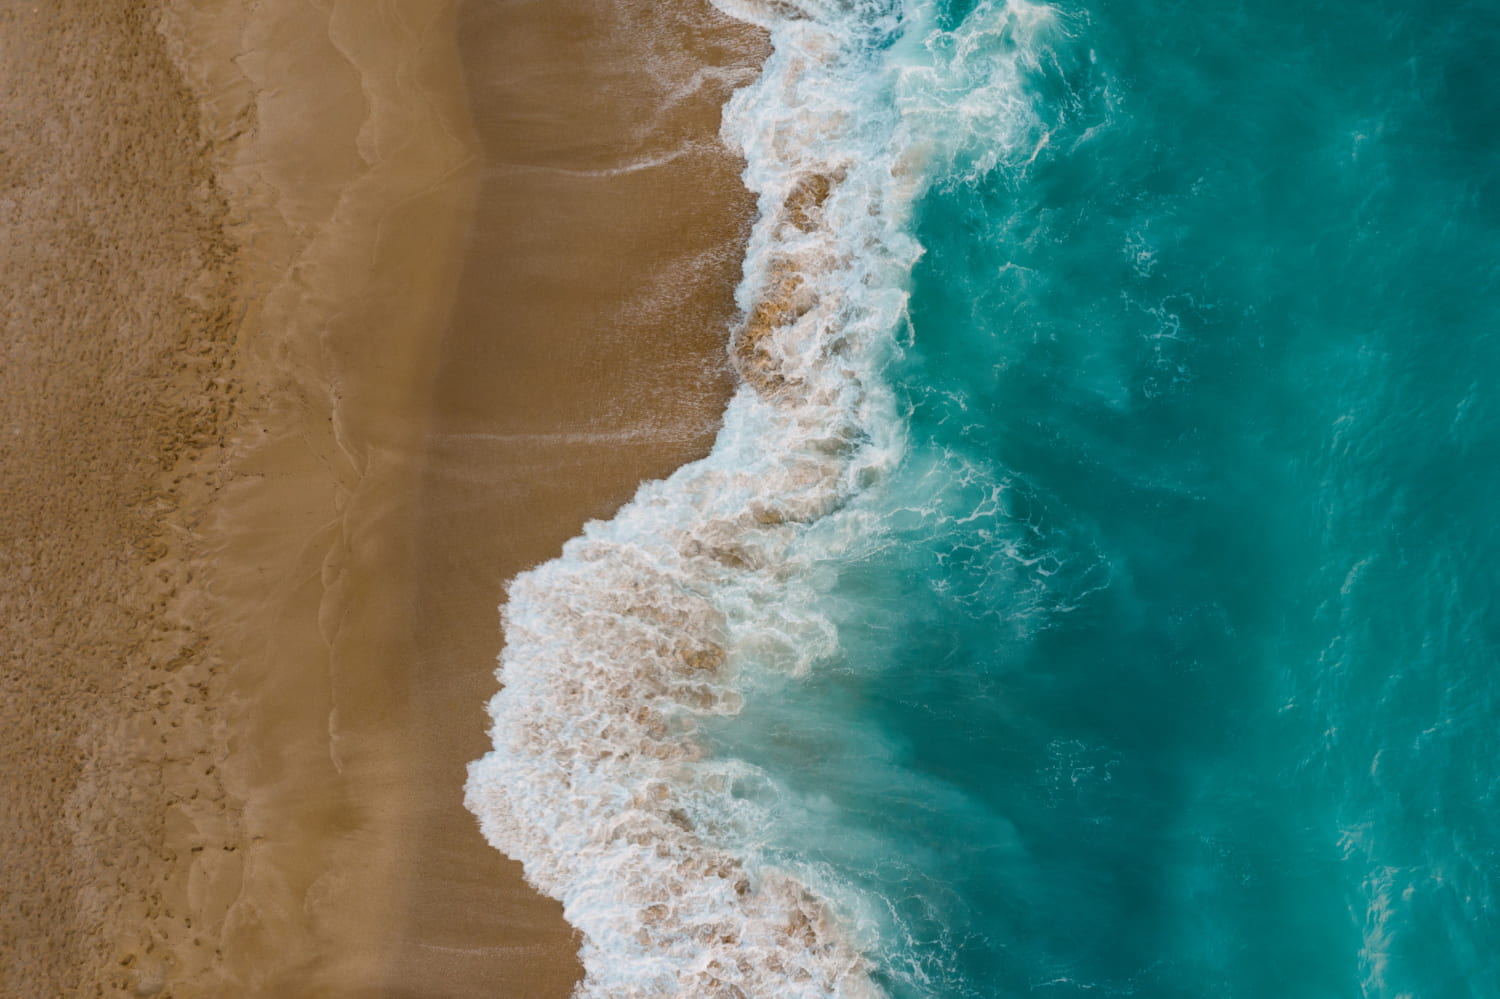 top view of sand meeting seawater

Image by ArthurHidden on Freepik